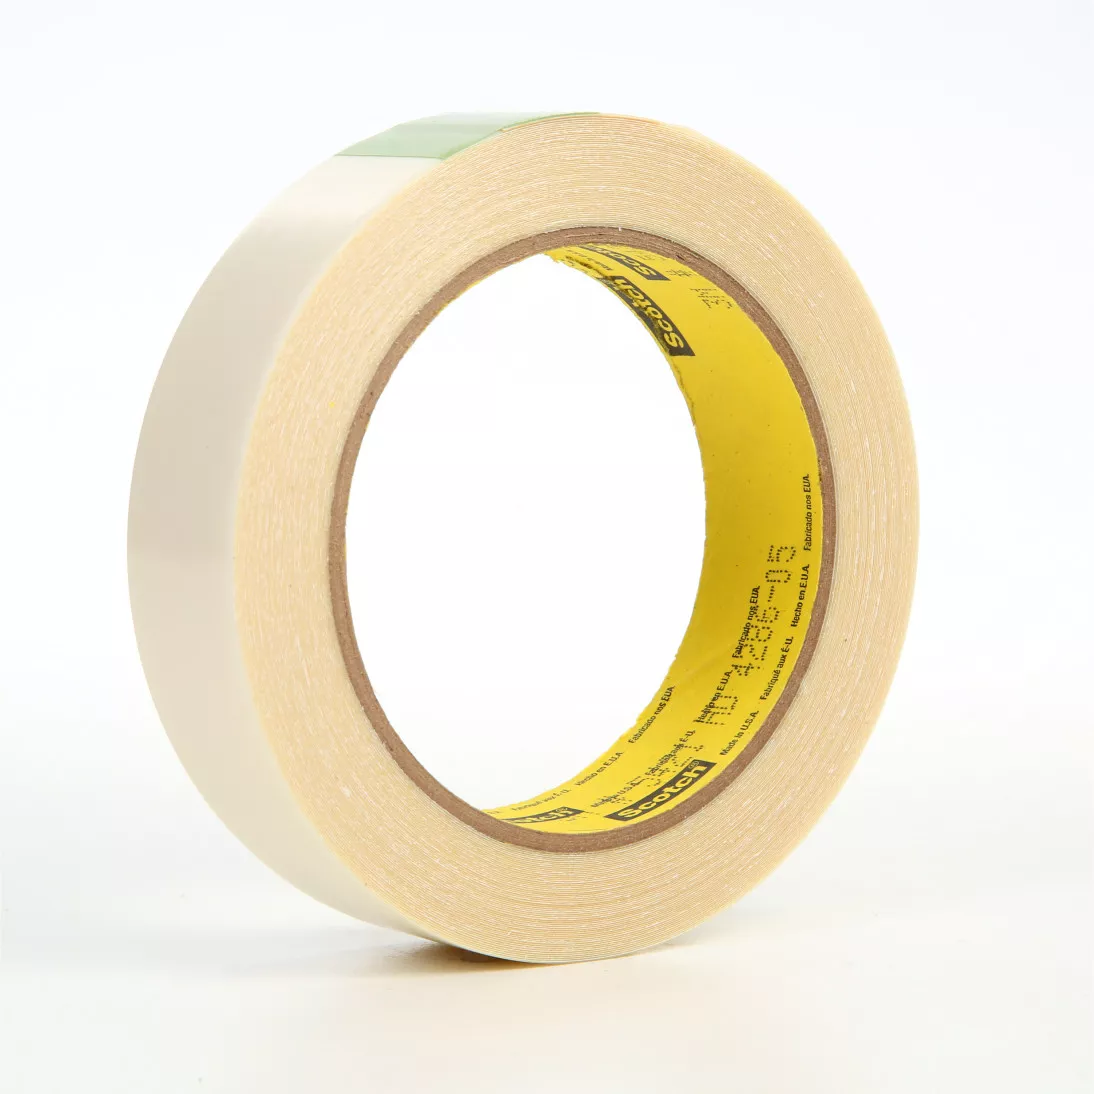 3M™ UHMW Film Tape 5421, Transparent, 1 in x 18 yd, 6.7 mil, 9 rolls per
case